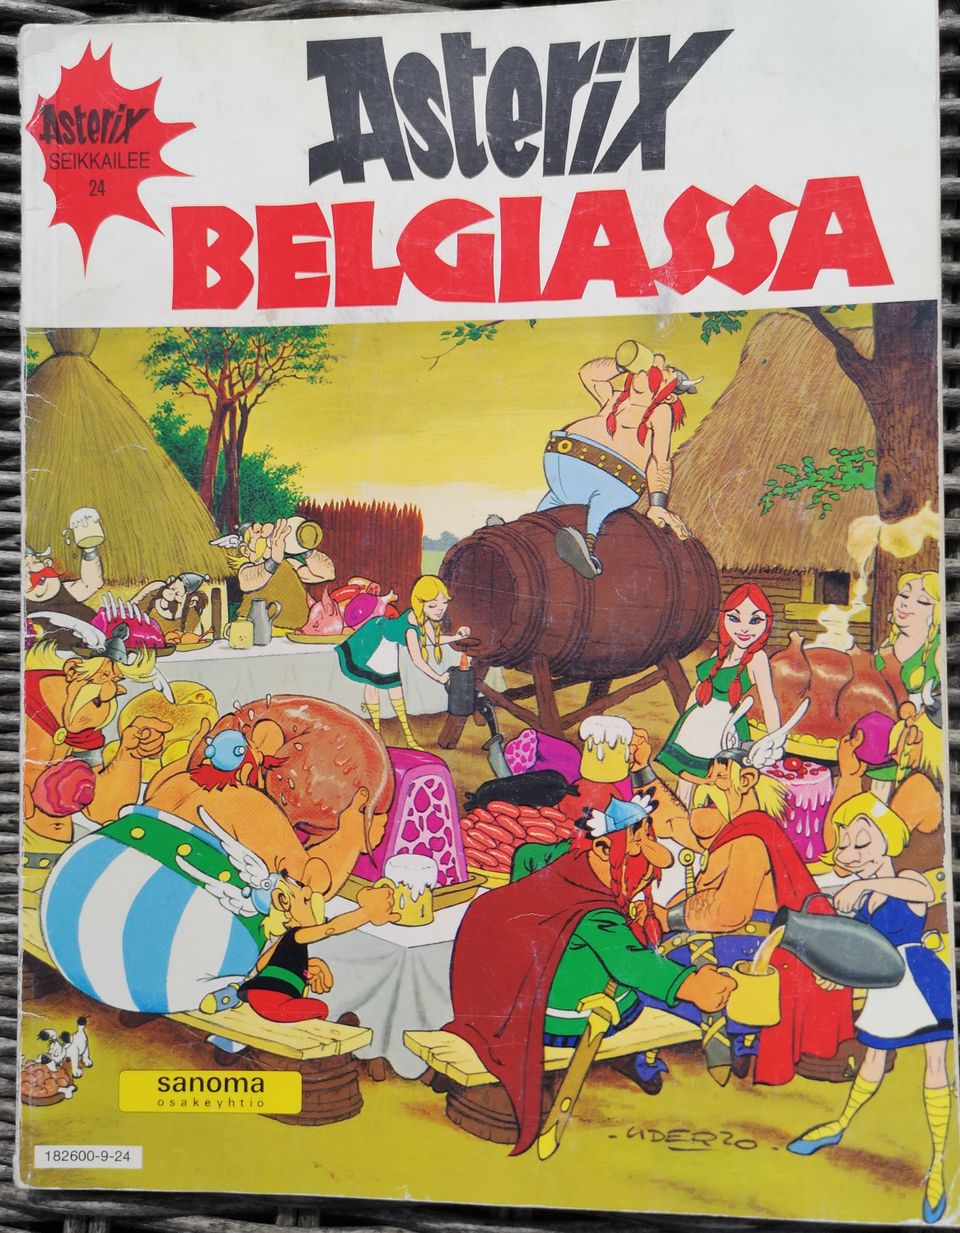 Asterix Belgiassa 1. painos v. 1979